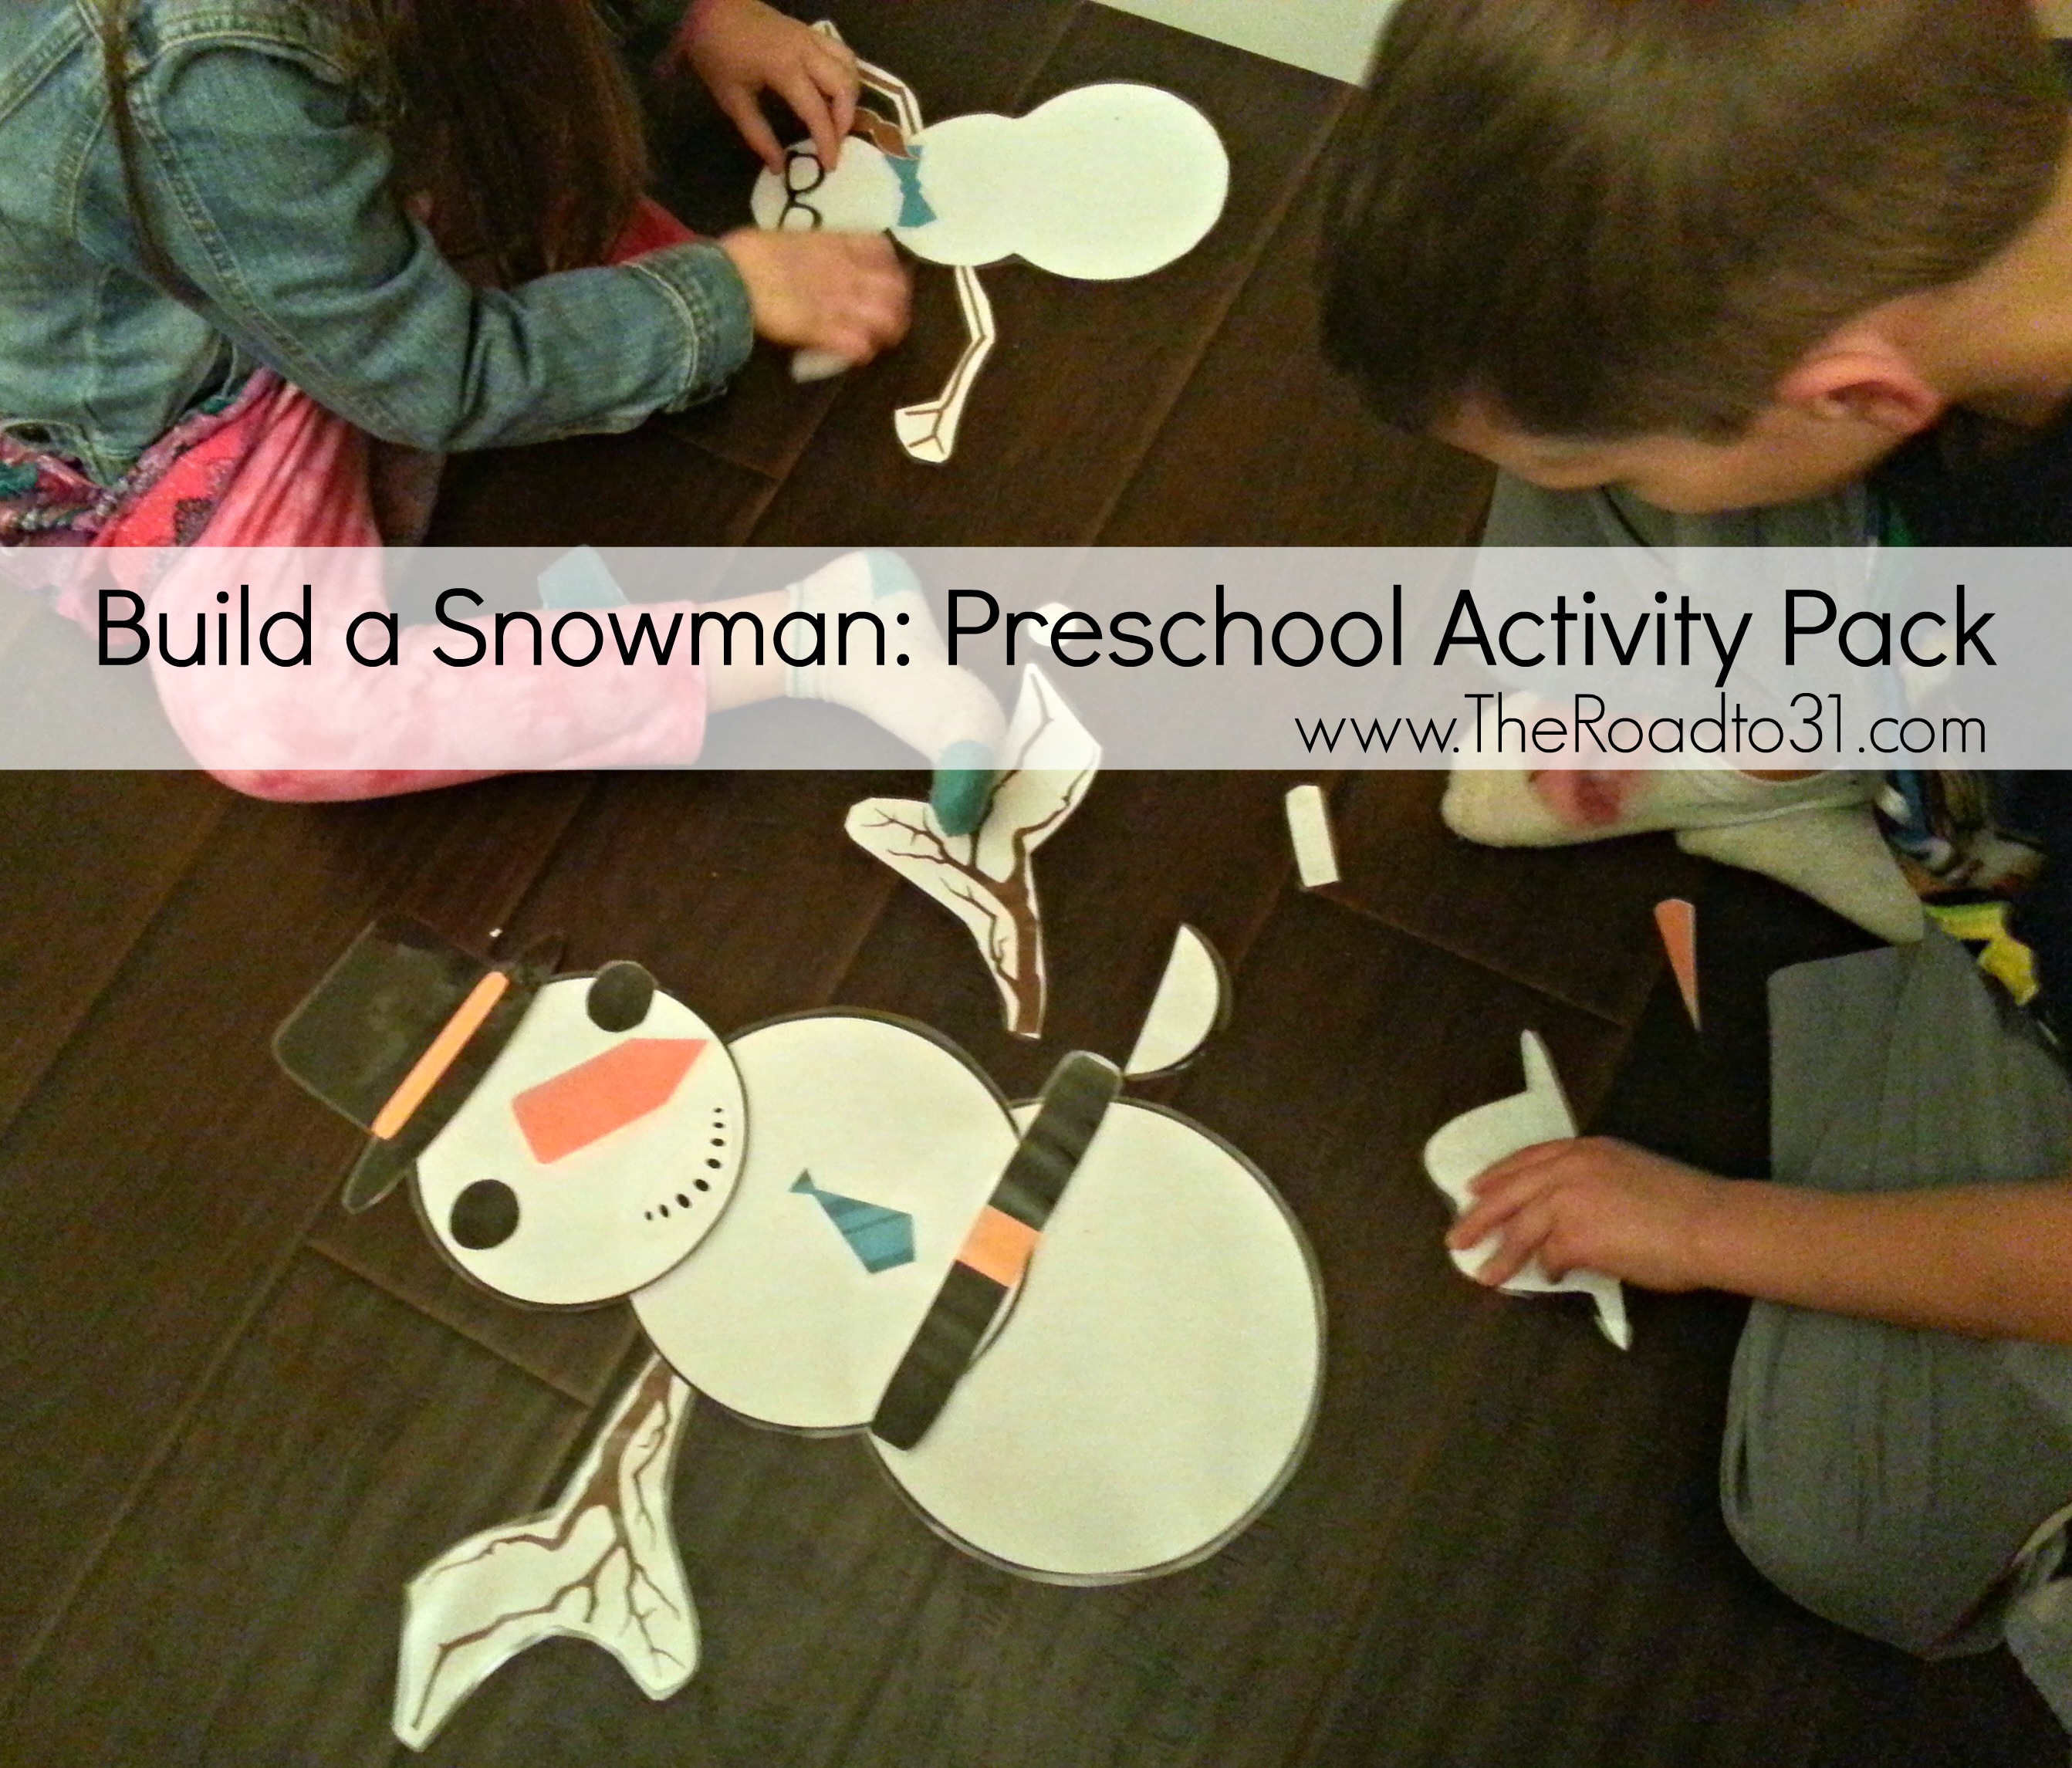 Build a Snowman Example